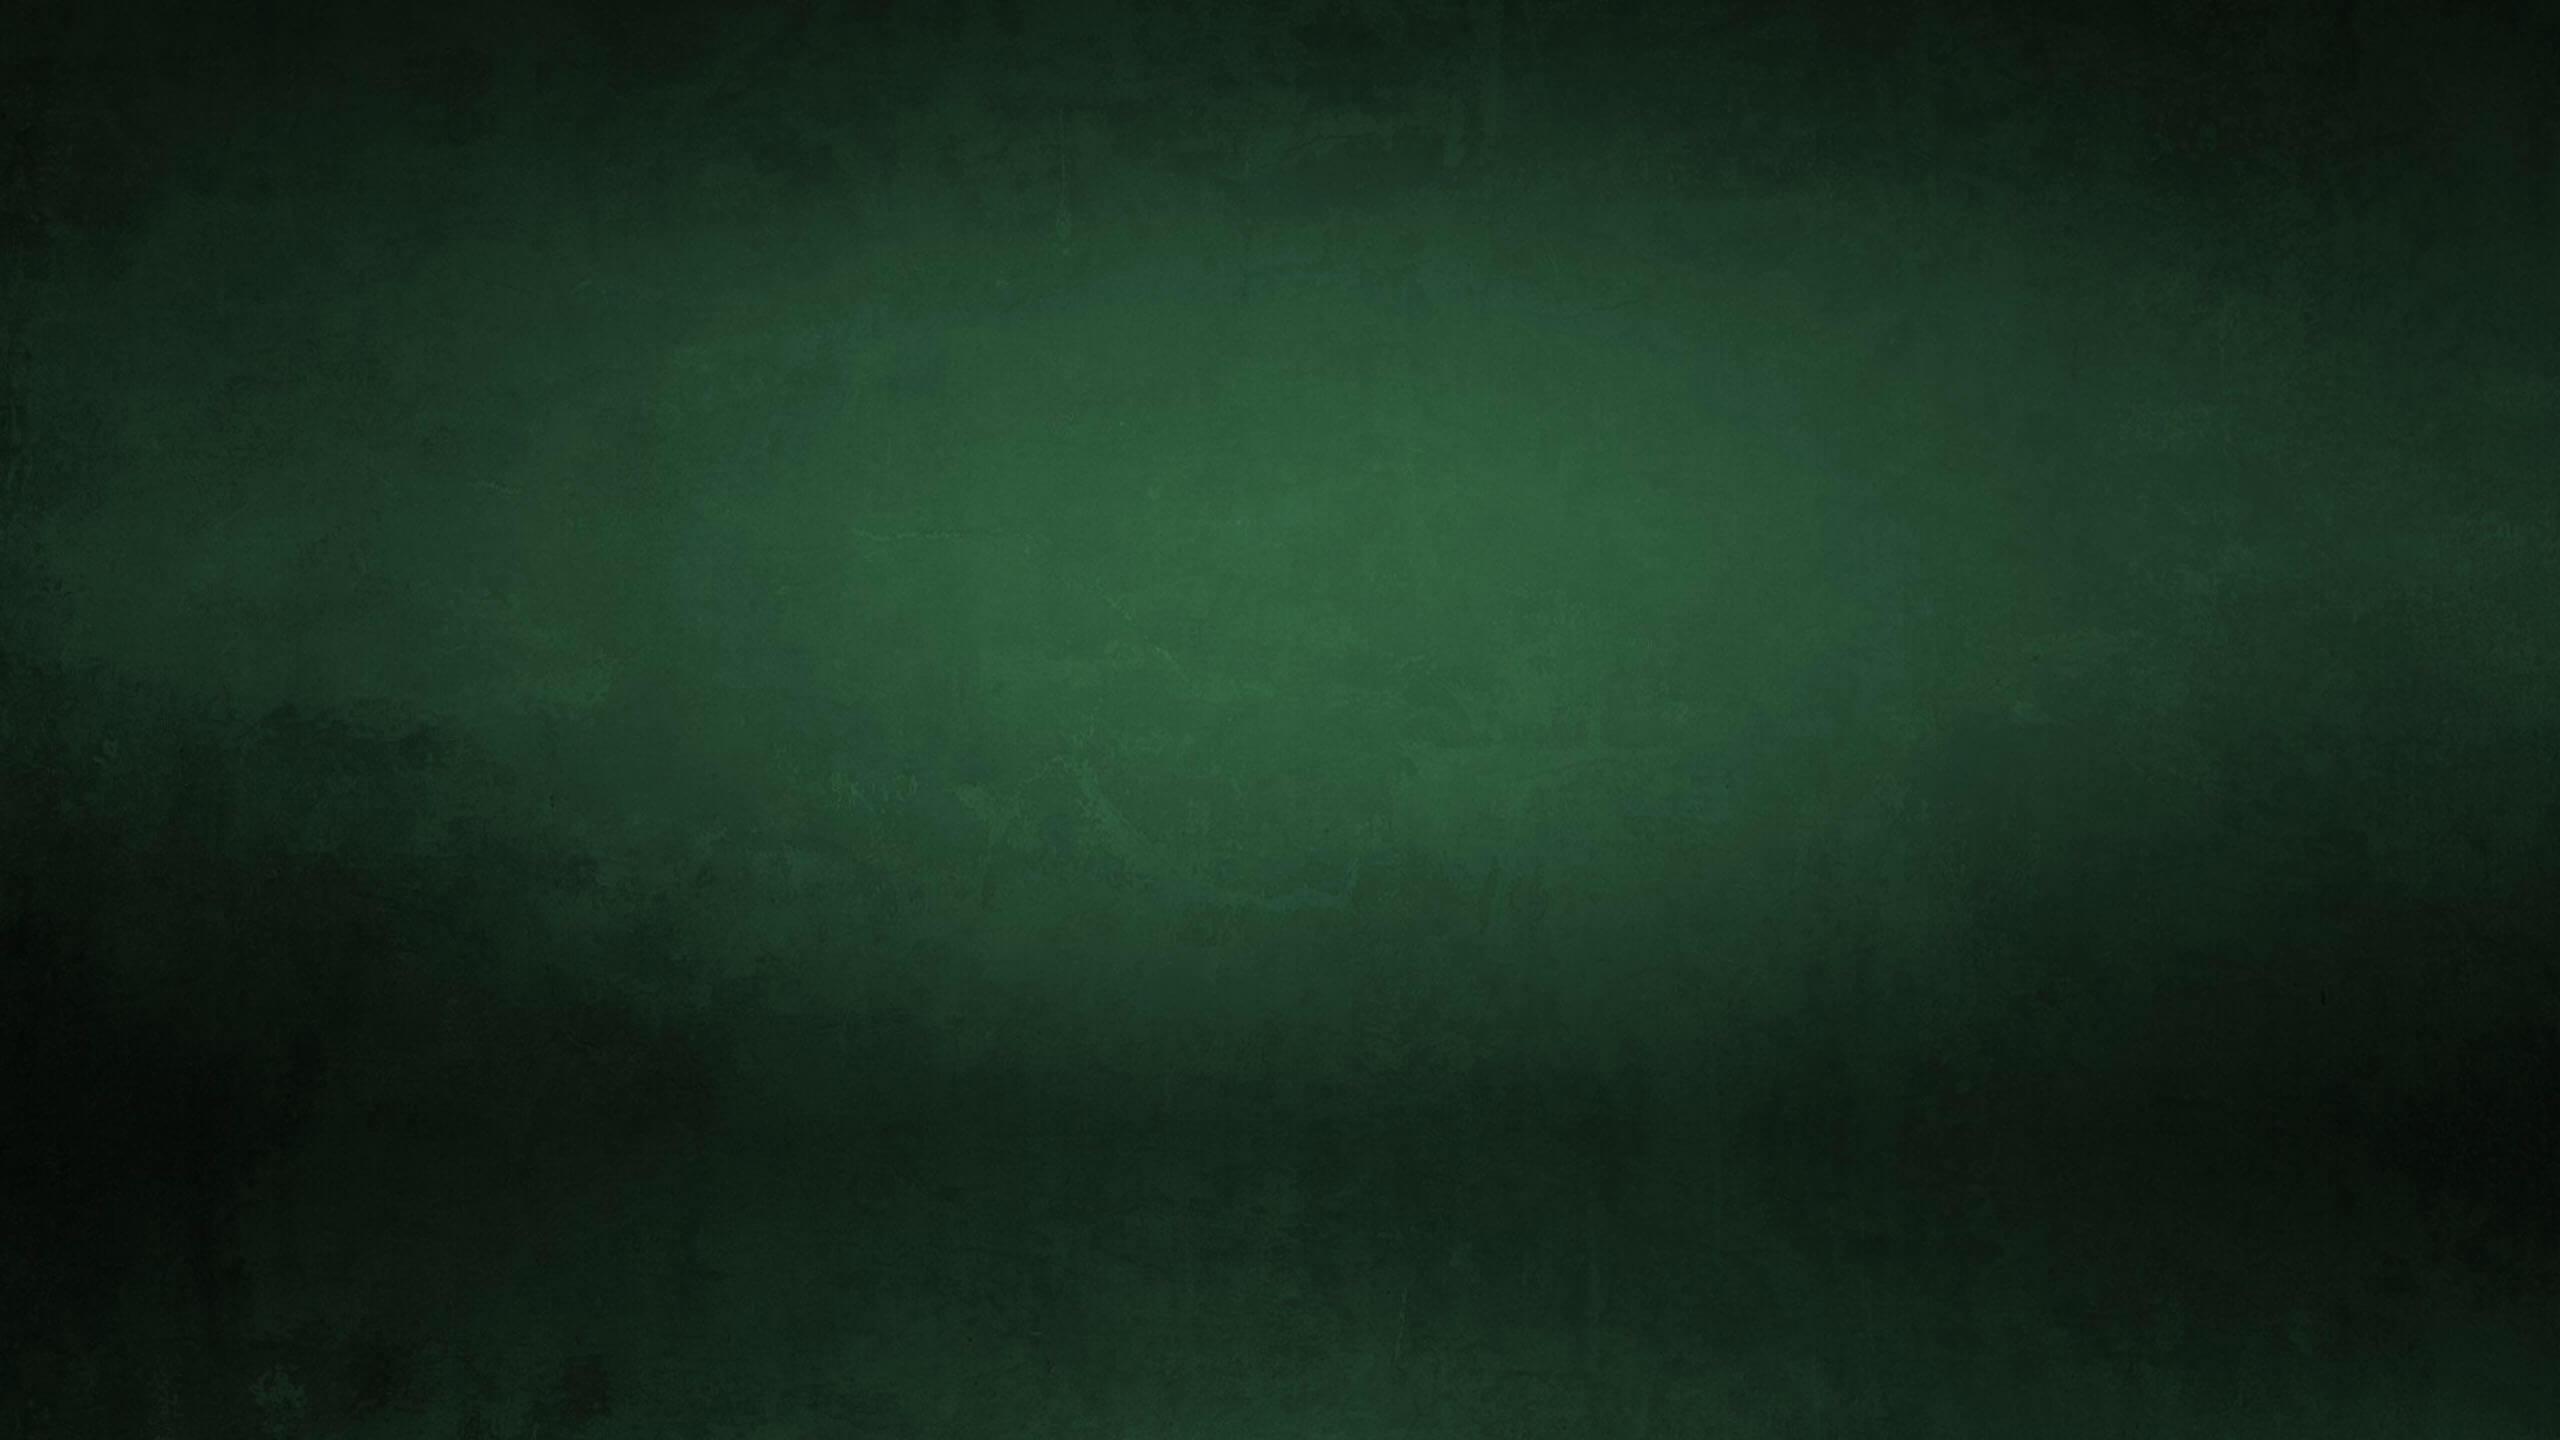 Dark Green Grunge Wallpaper Background 49803 51481 Hd Wallpaper